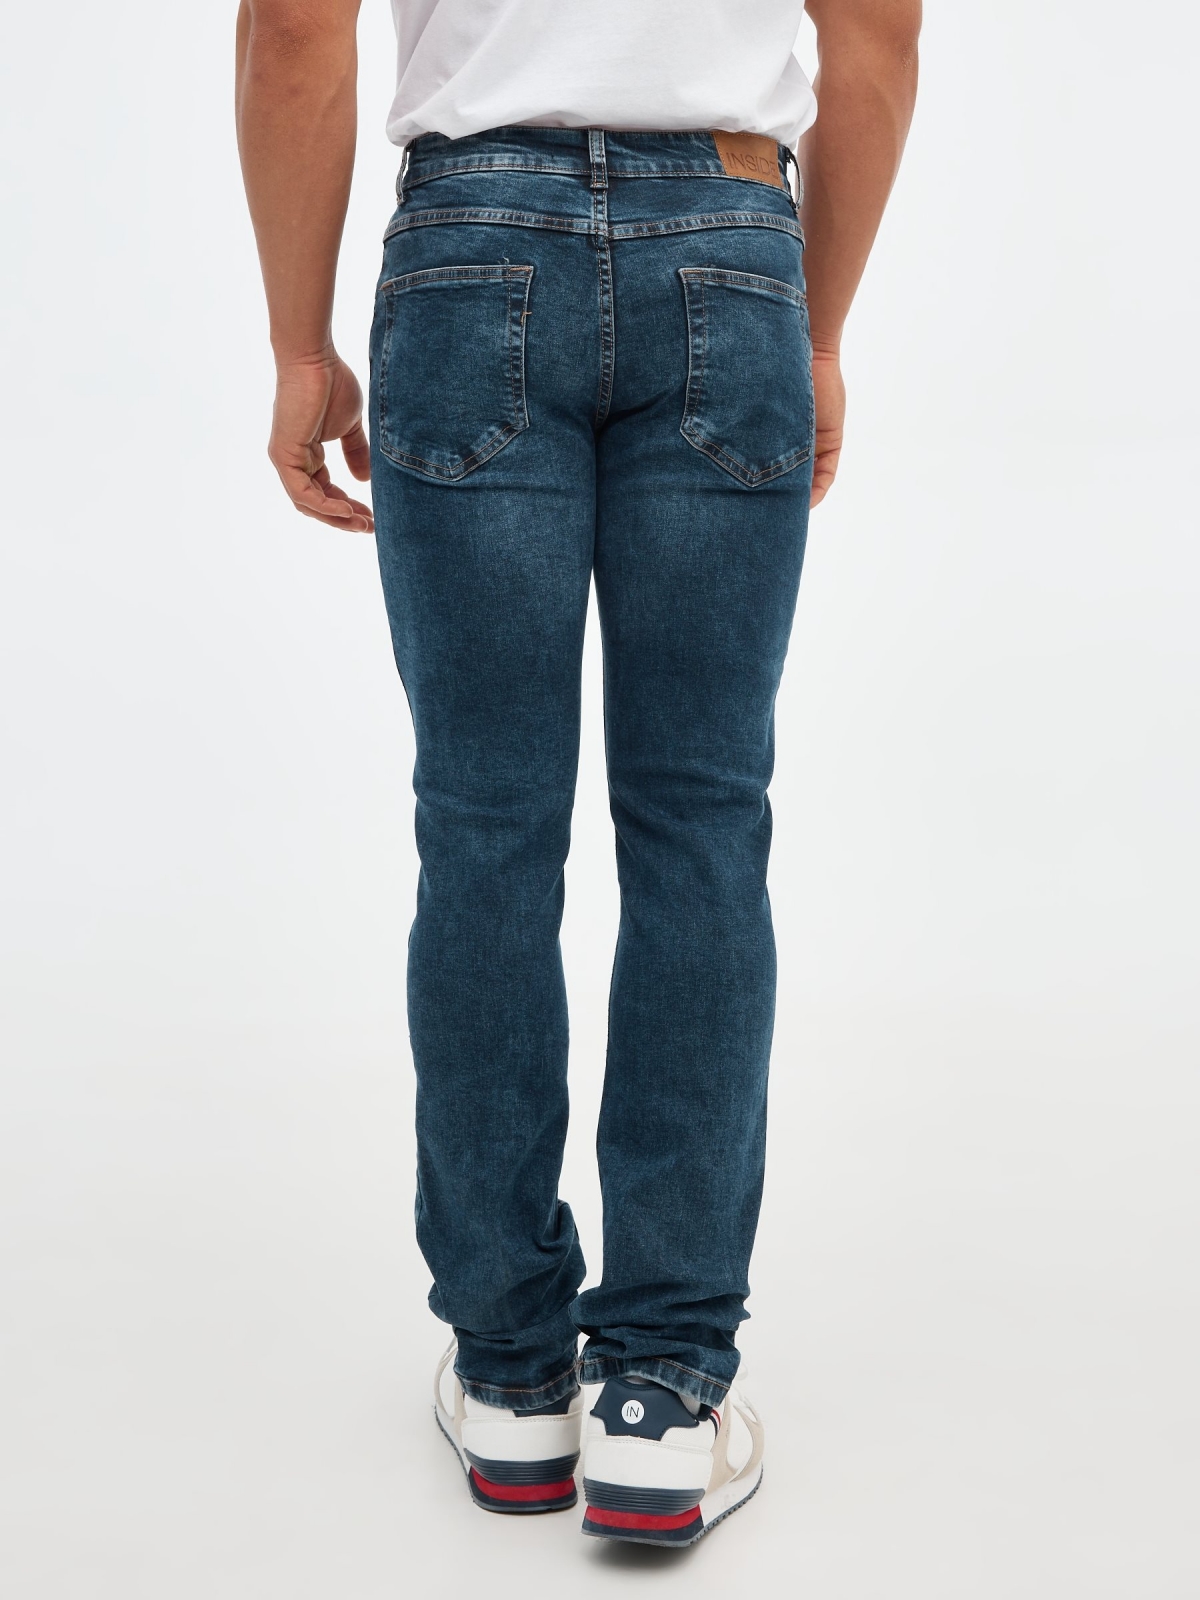 Basic regular jeans blue front view